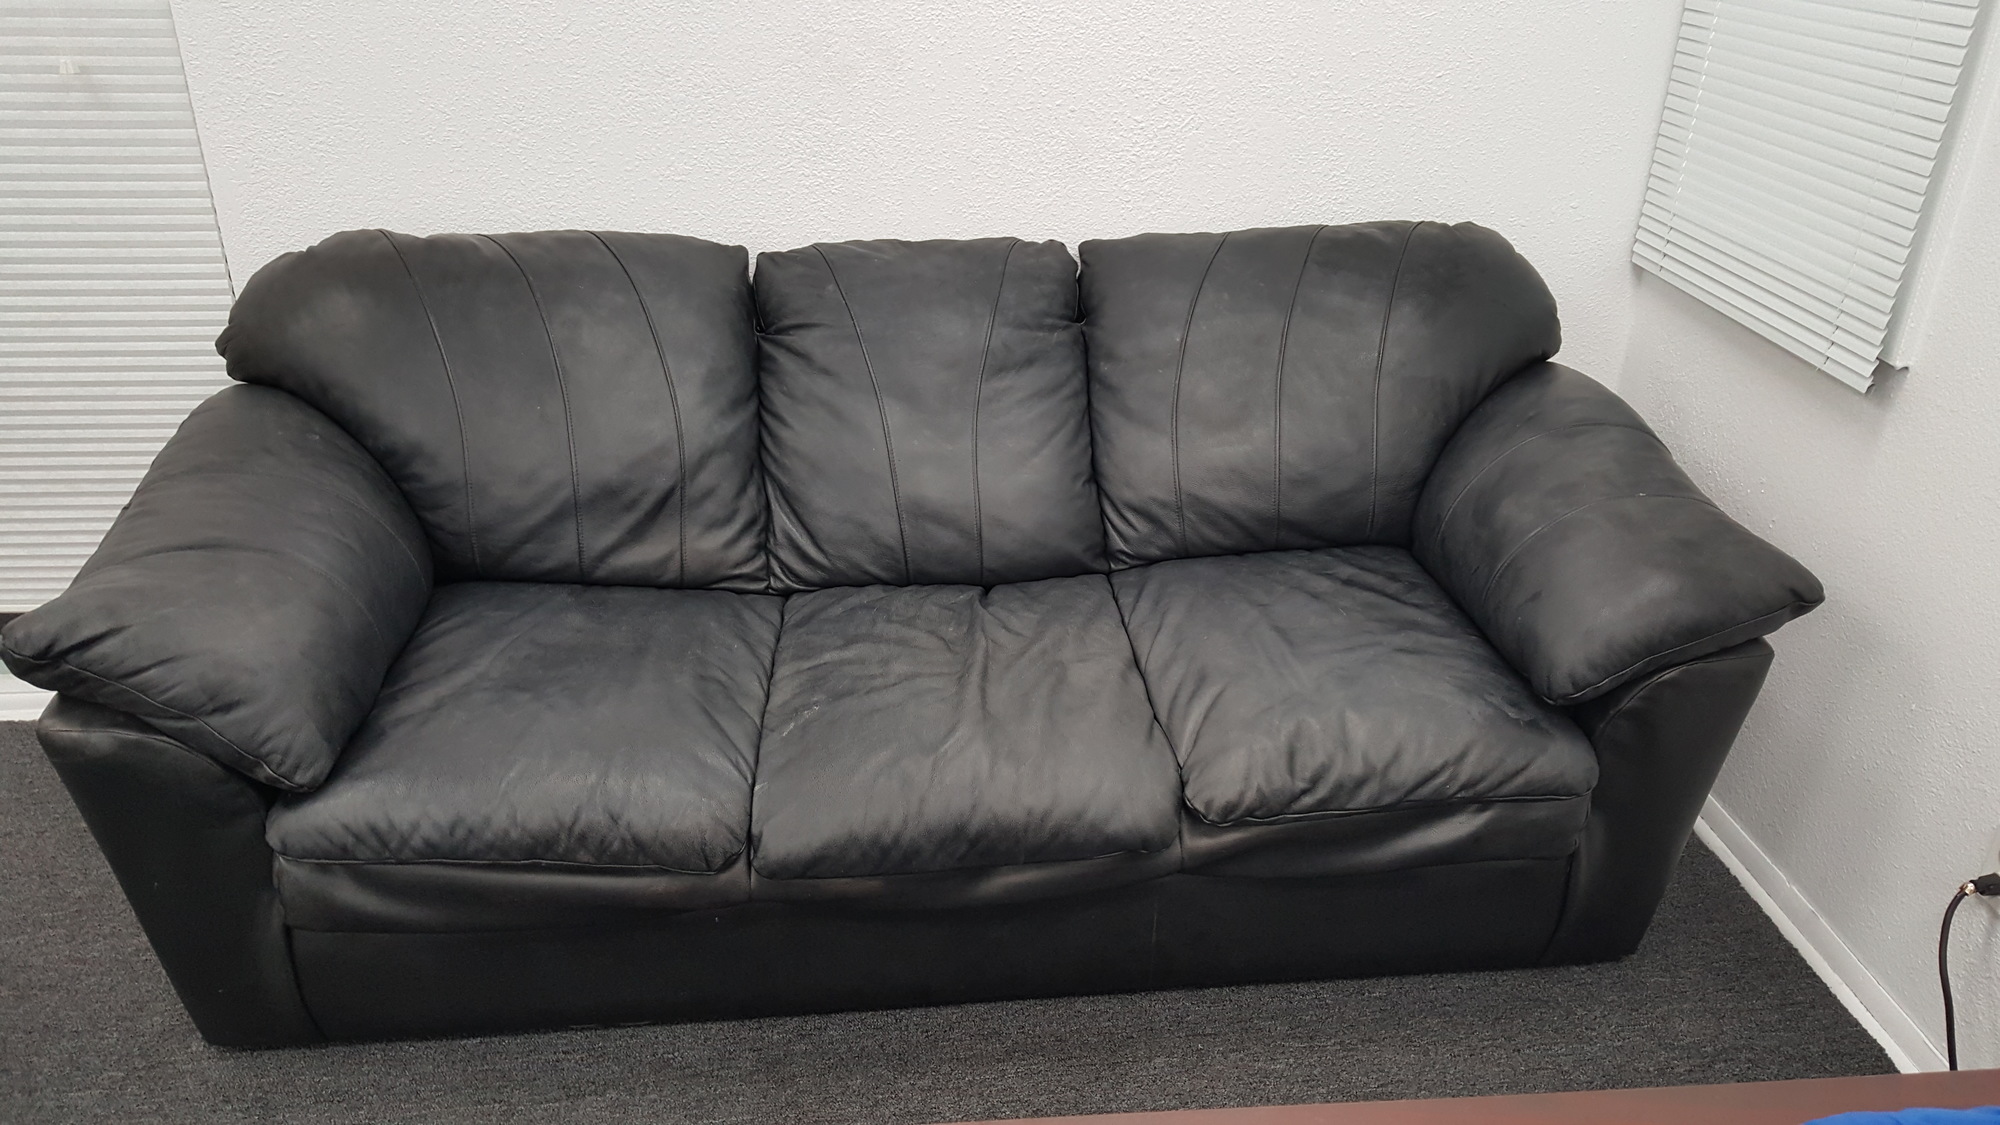 Backroom_Casting_Couch%2C_Original%2C_Scottsdale%2C_AZ.jpg